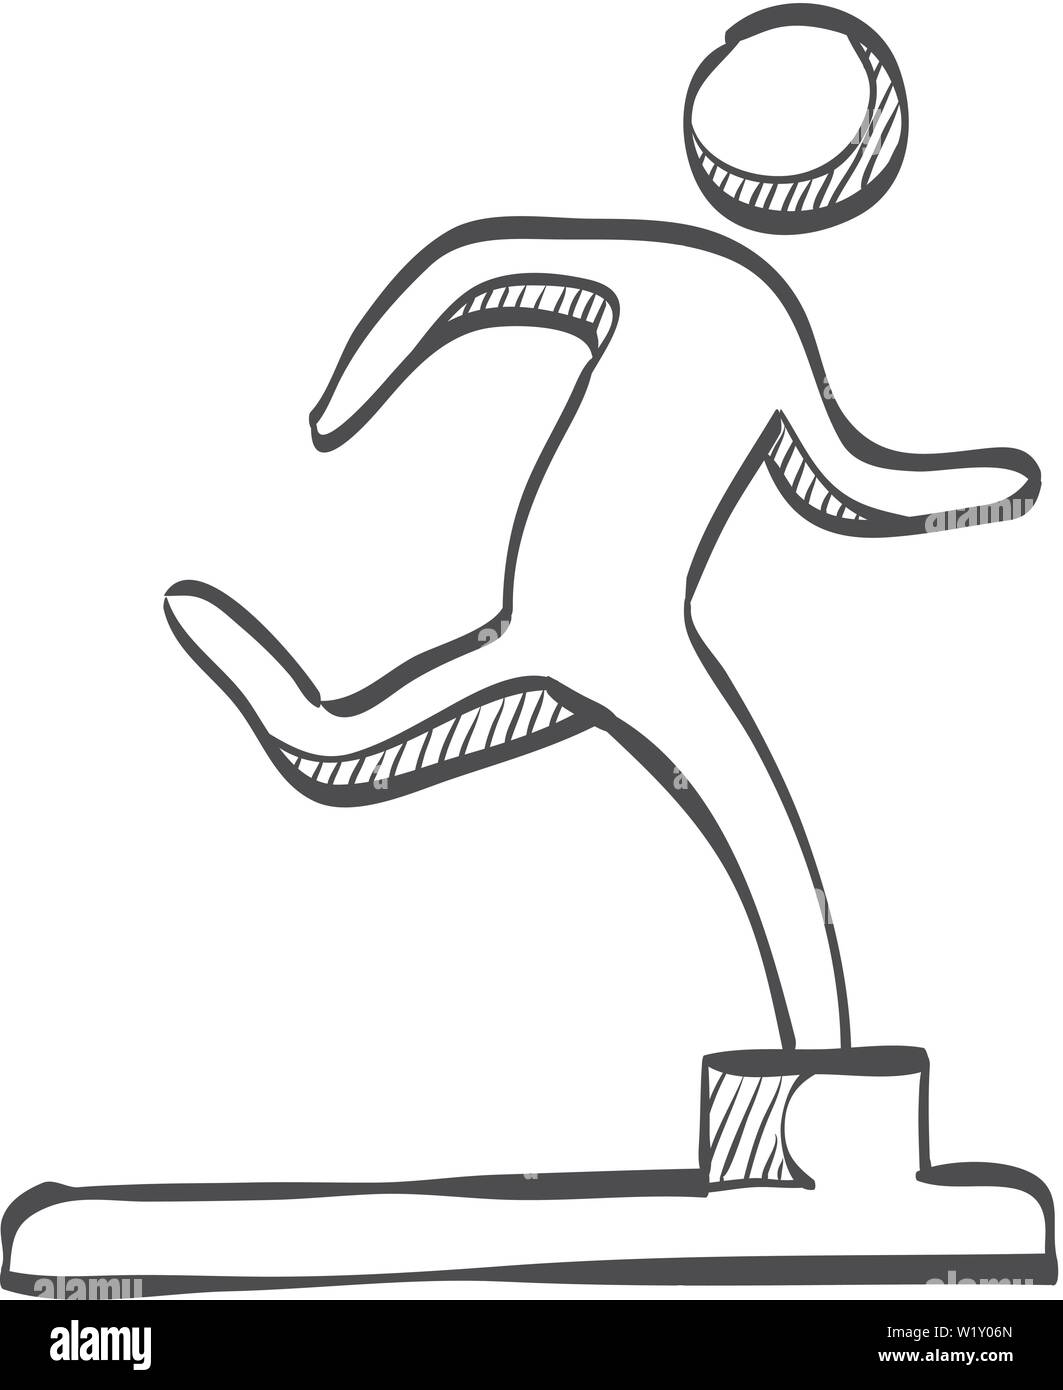 Athletic trophy icon in doodle sketch lines. Running triathlon